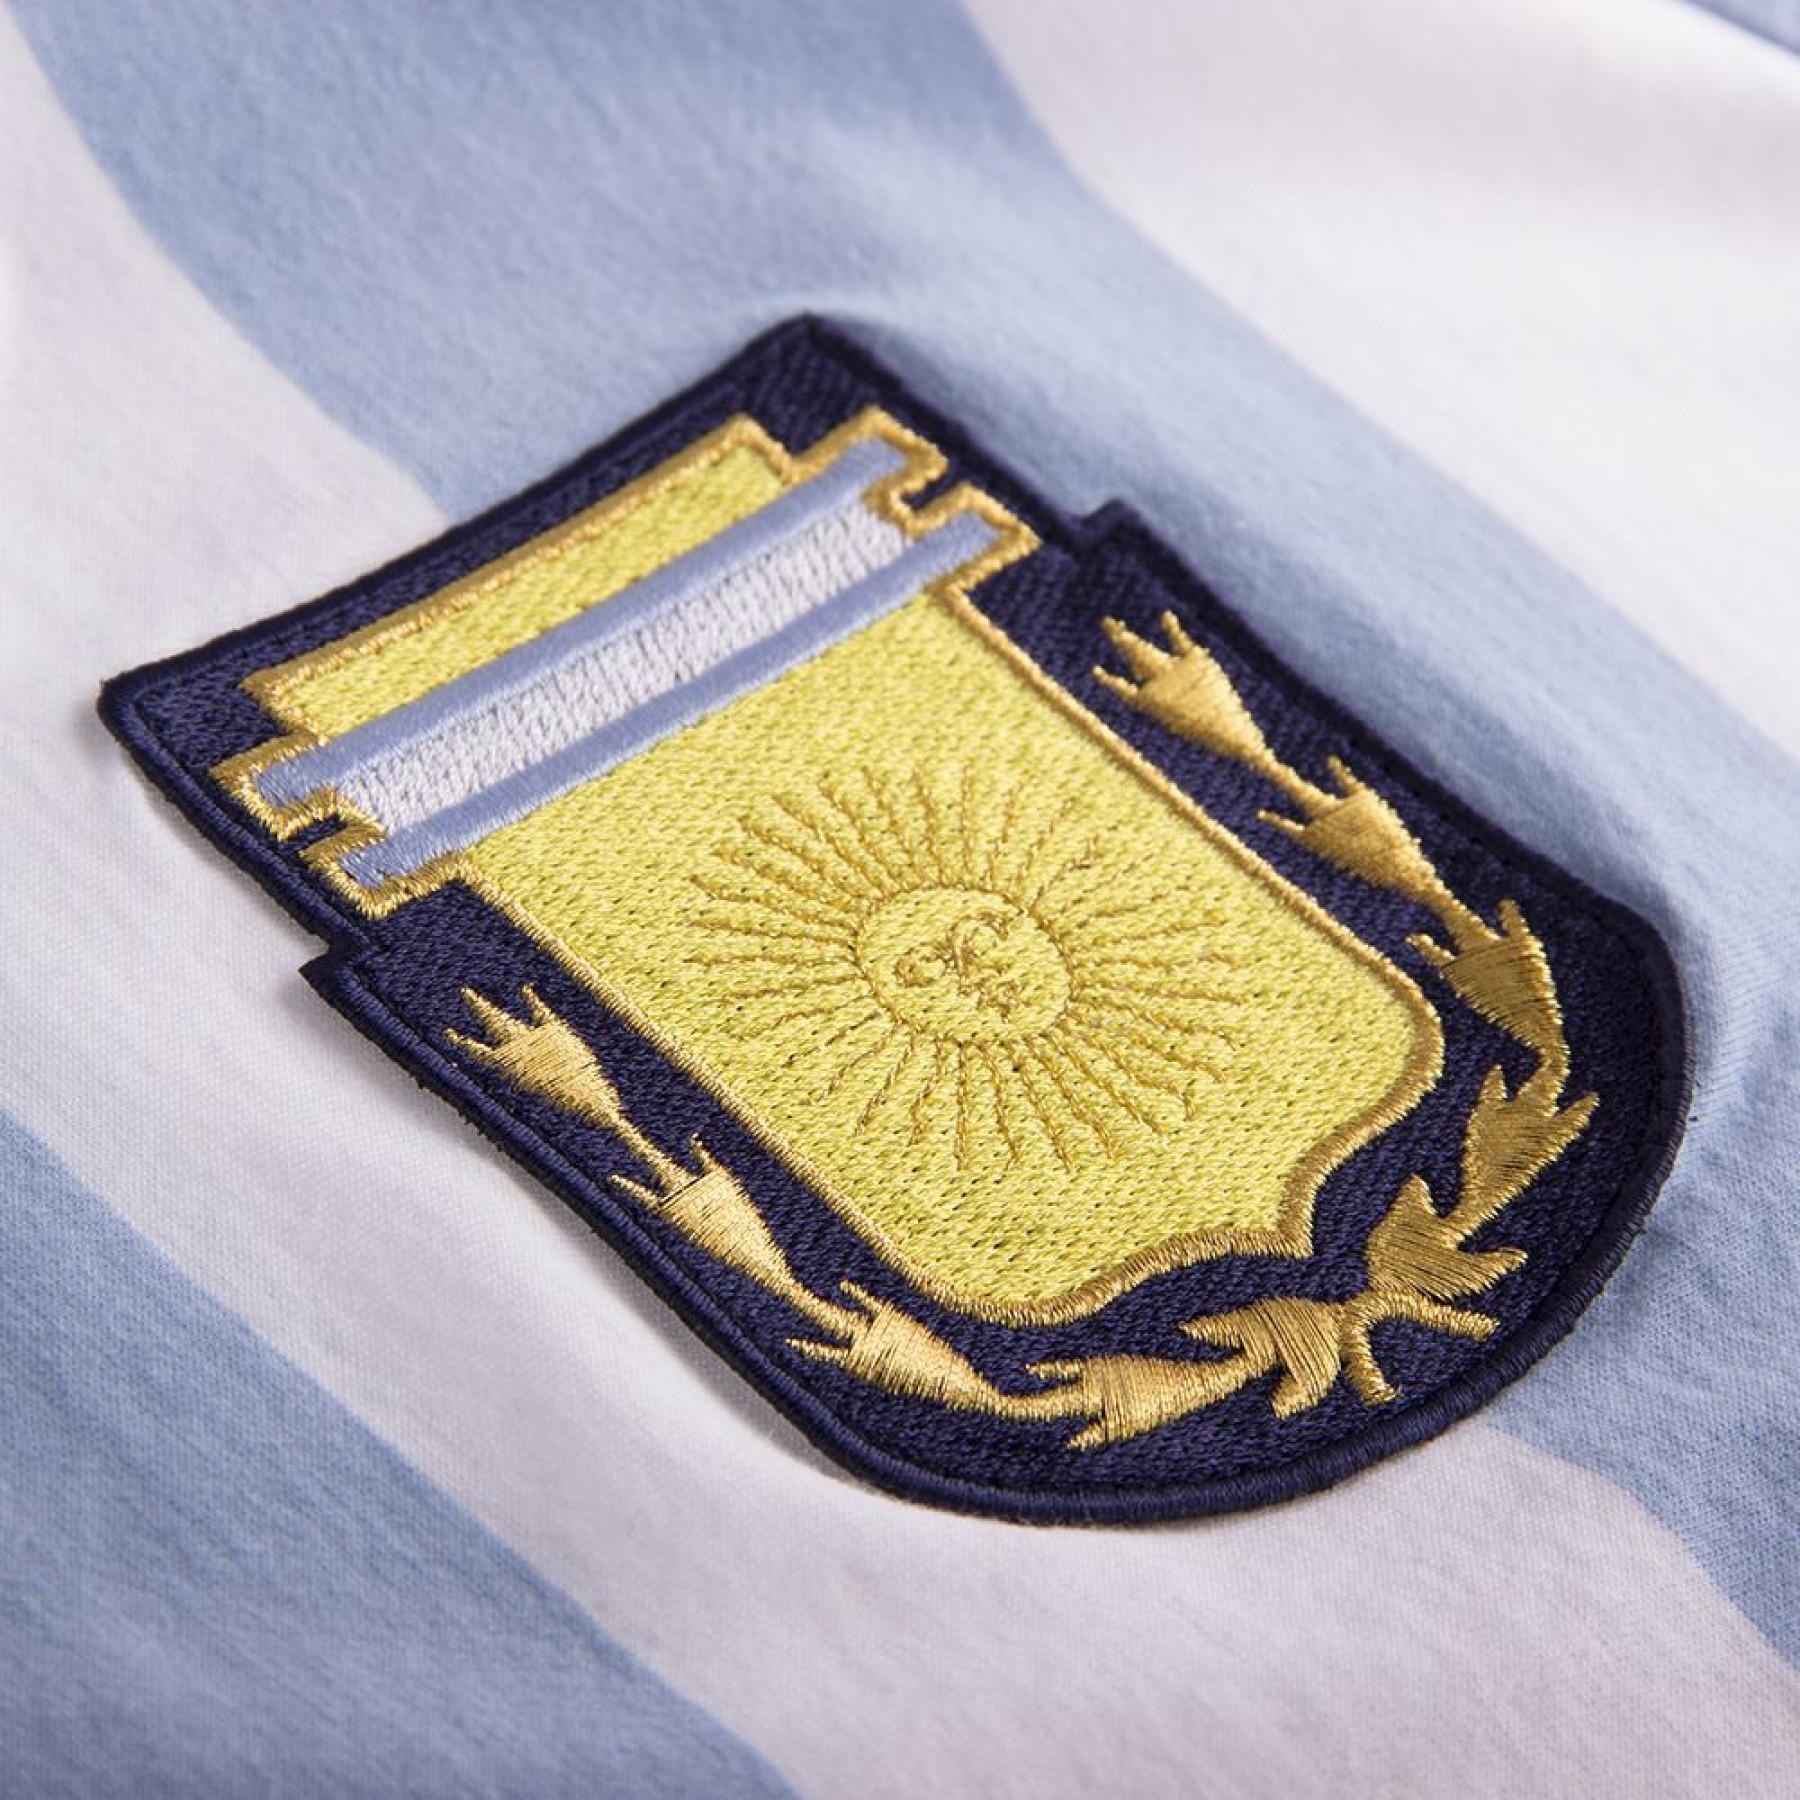 Home T-shirt Argentina 1982